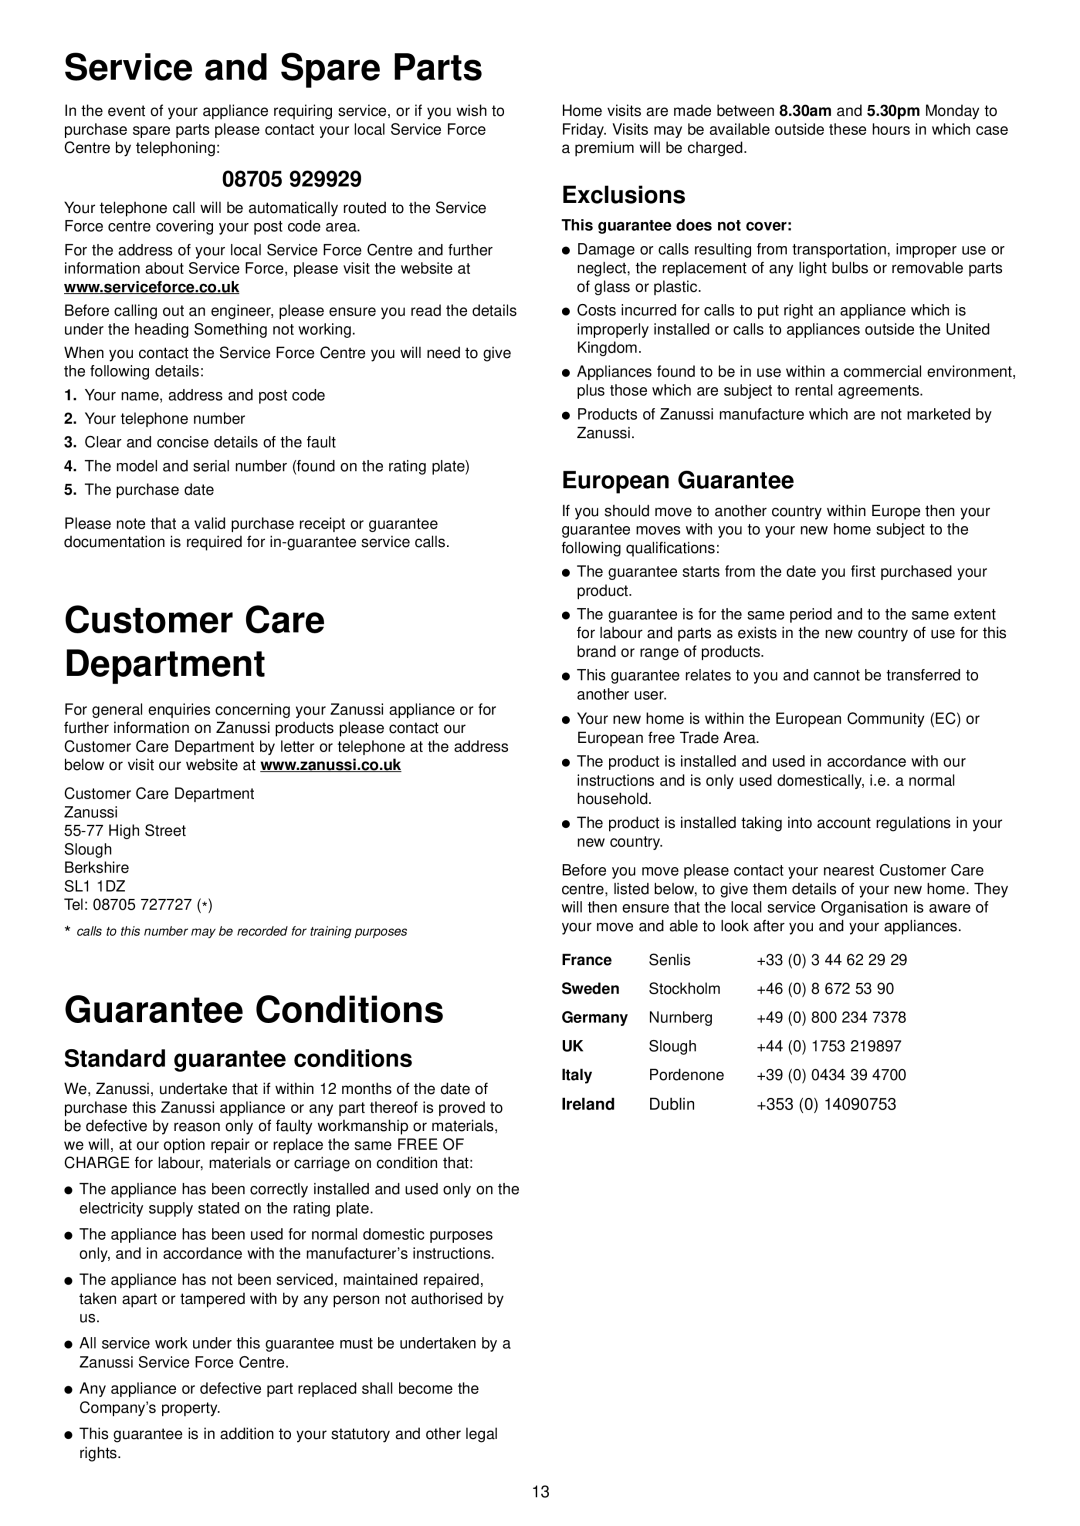 Zanussi IZZI Service and Spare Parts, Customer Care Department, Guarantee Conditions, Standard guarantee conditions, 08705 